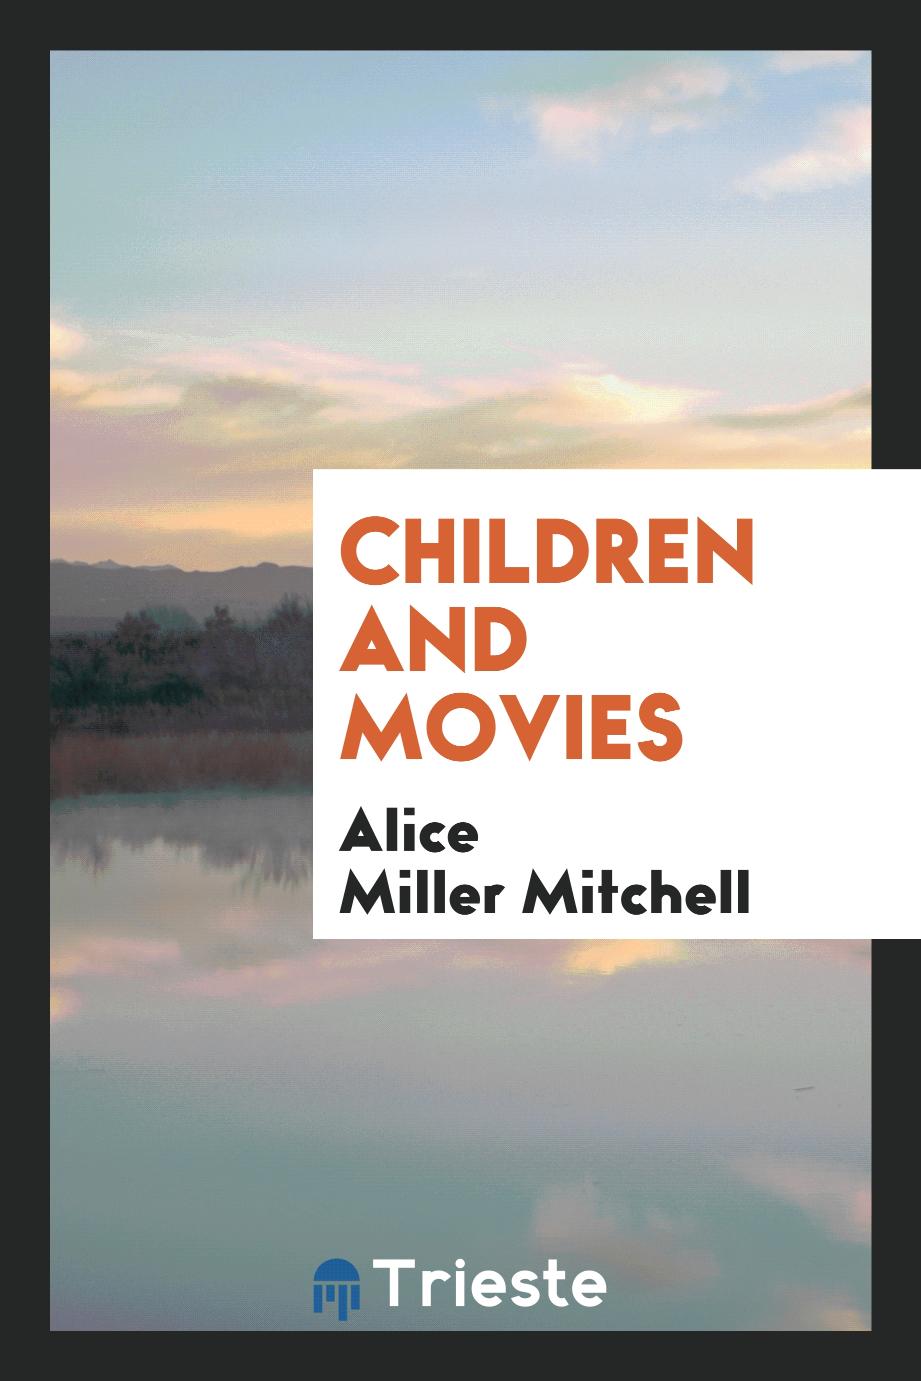 Children and movies